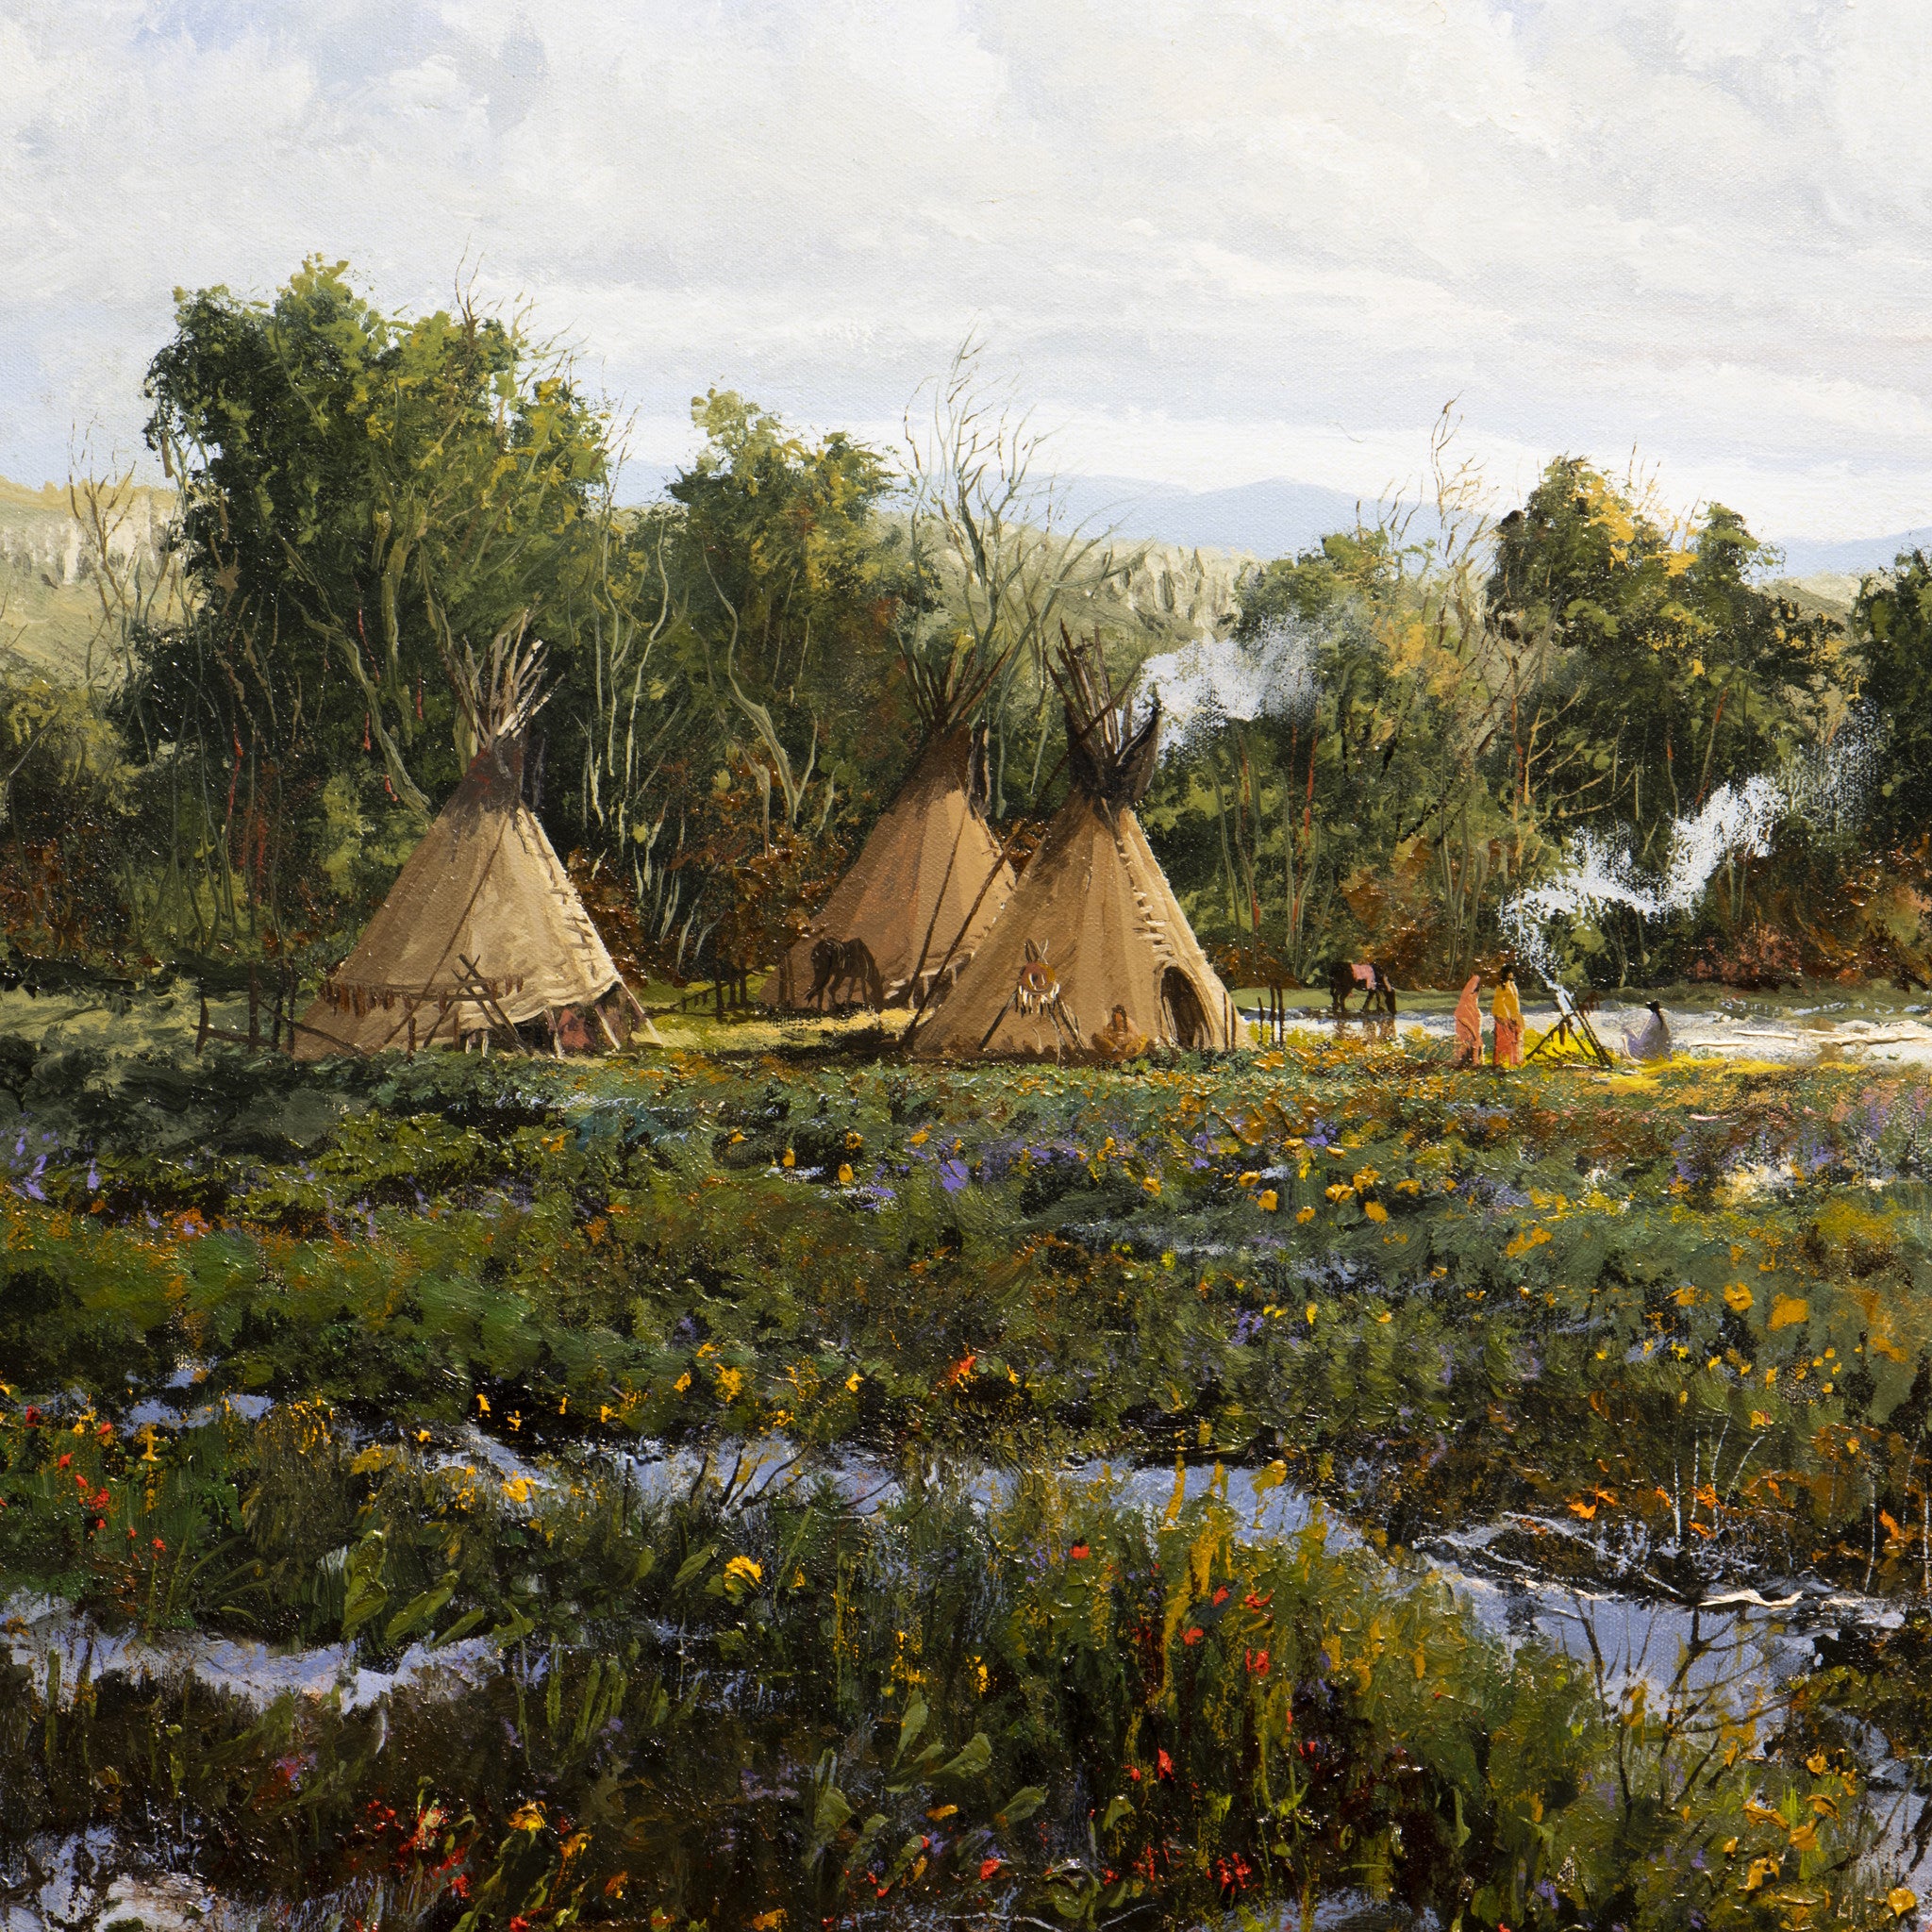 North Country Native American Encampment by Thomas deDecker